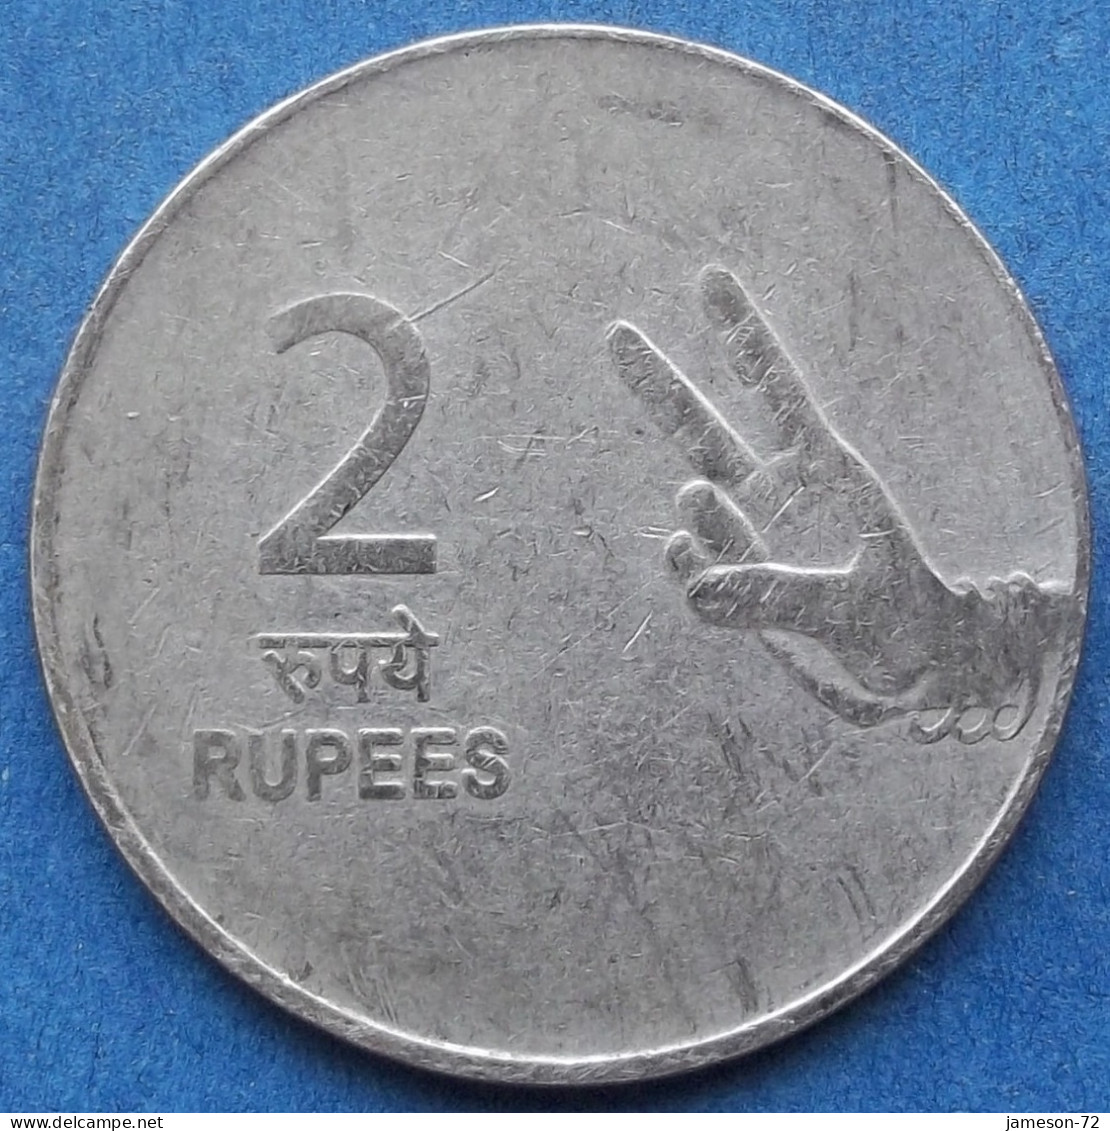 INDIA - 2 Rupees 2008 "Hasta Mudra" KM# 327 Republic Decimal Coinage (1957) - Edelweiss Coins - Georgia